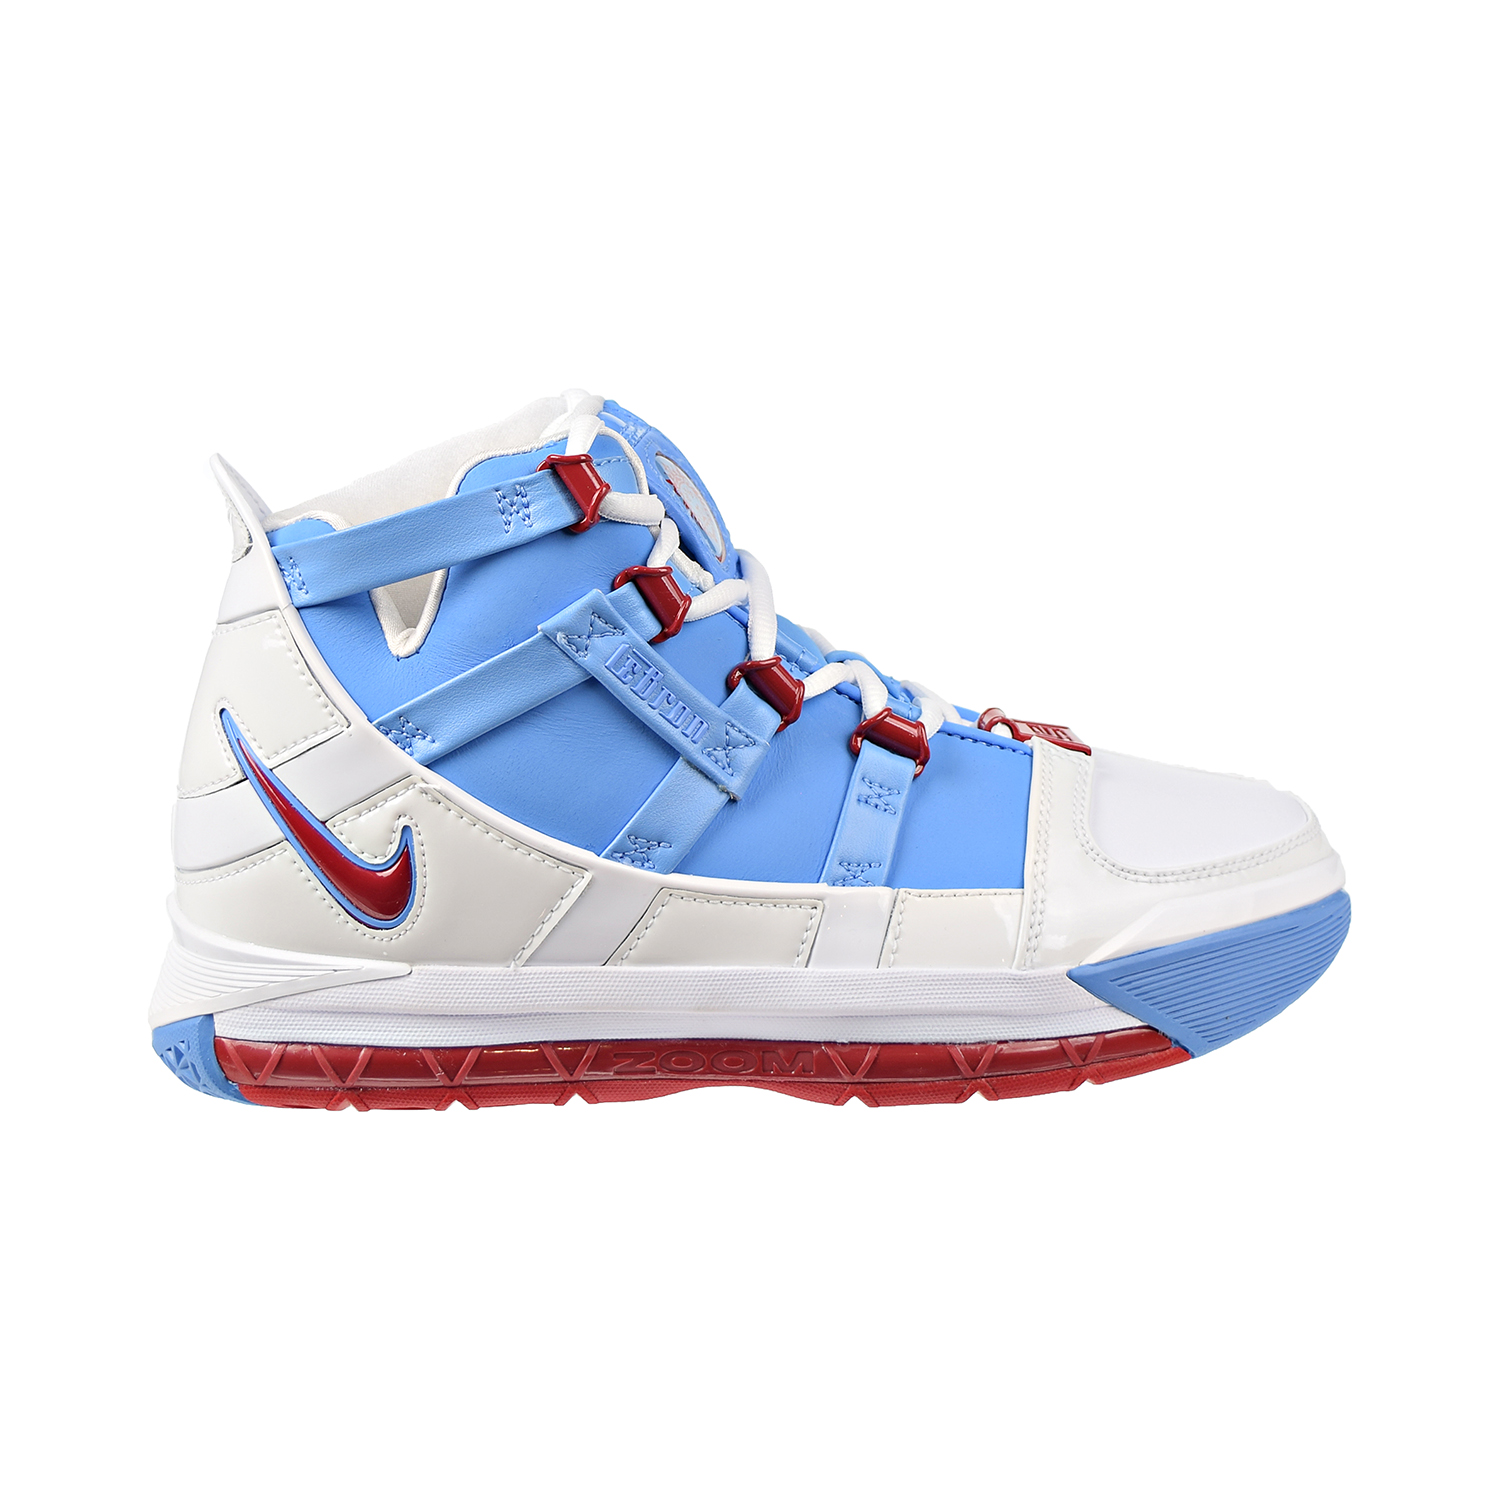 Nike Zoom Lebron III QS "Houston Oilers" Men's Shoes University Blue/Red ao2434-400 - image 1 of 6